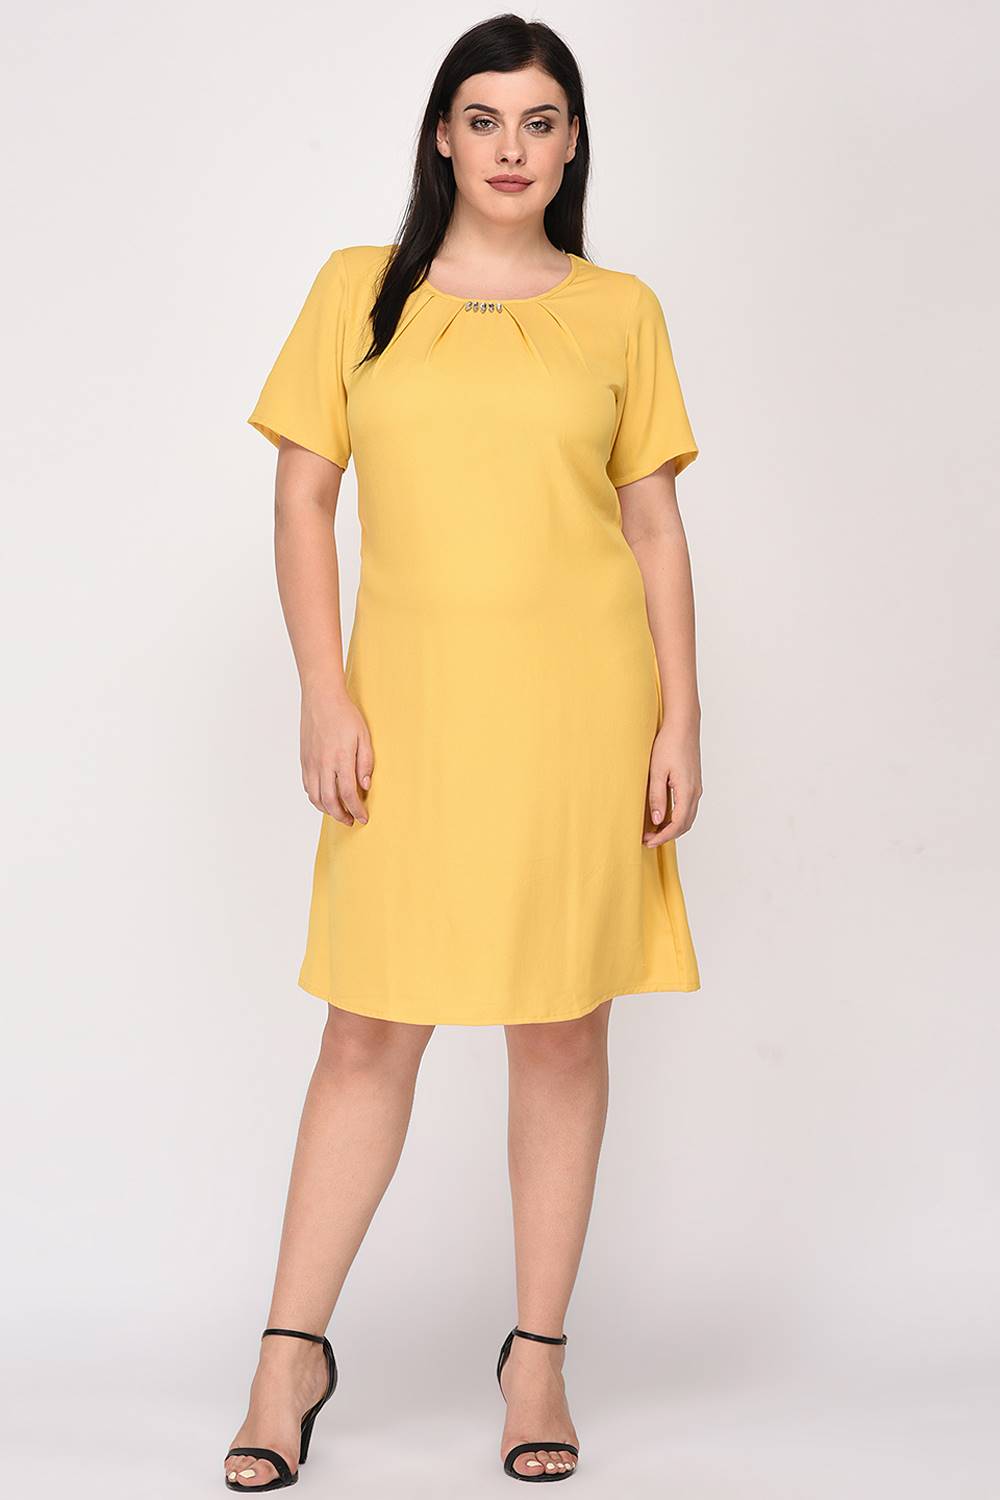 Yellow A-line Dress - LASTINCH